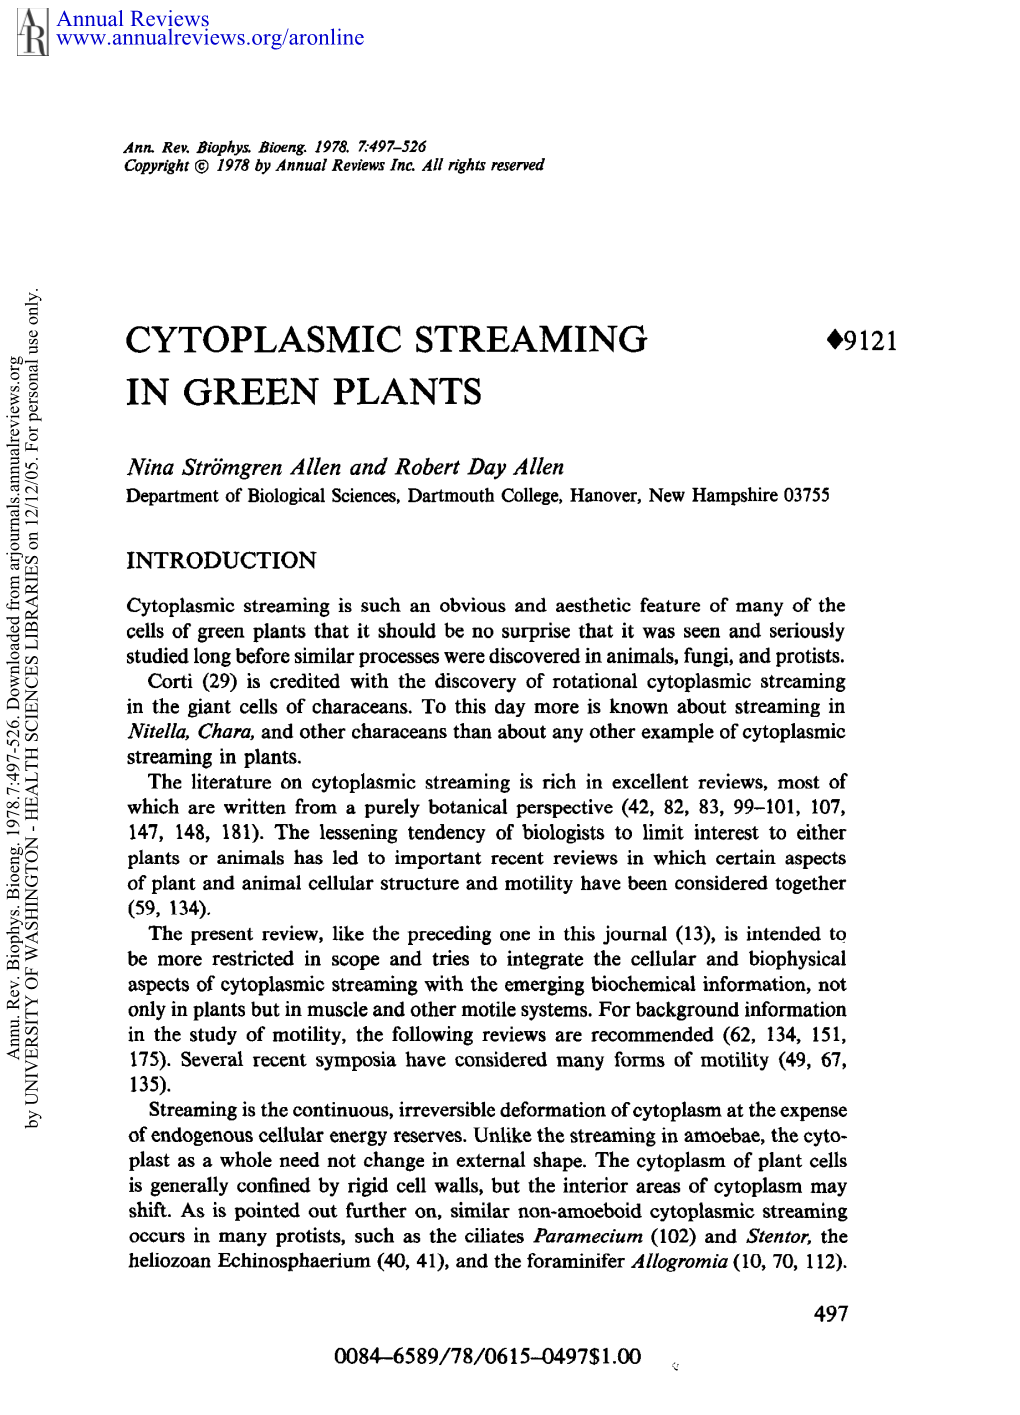 Cytoplasmic Streaming in Green Plants